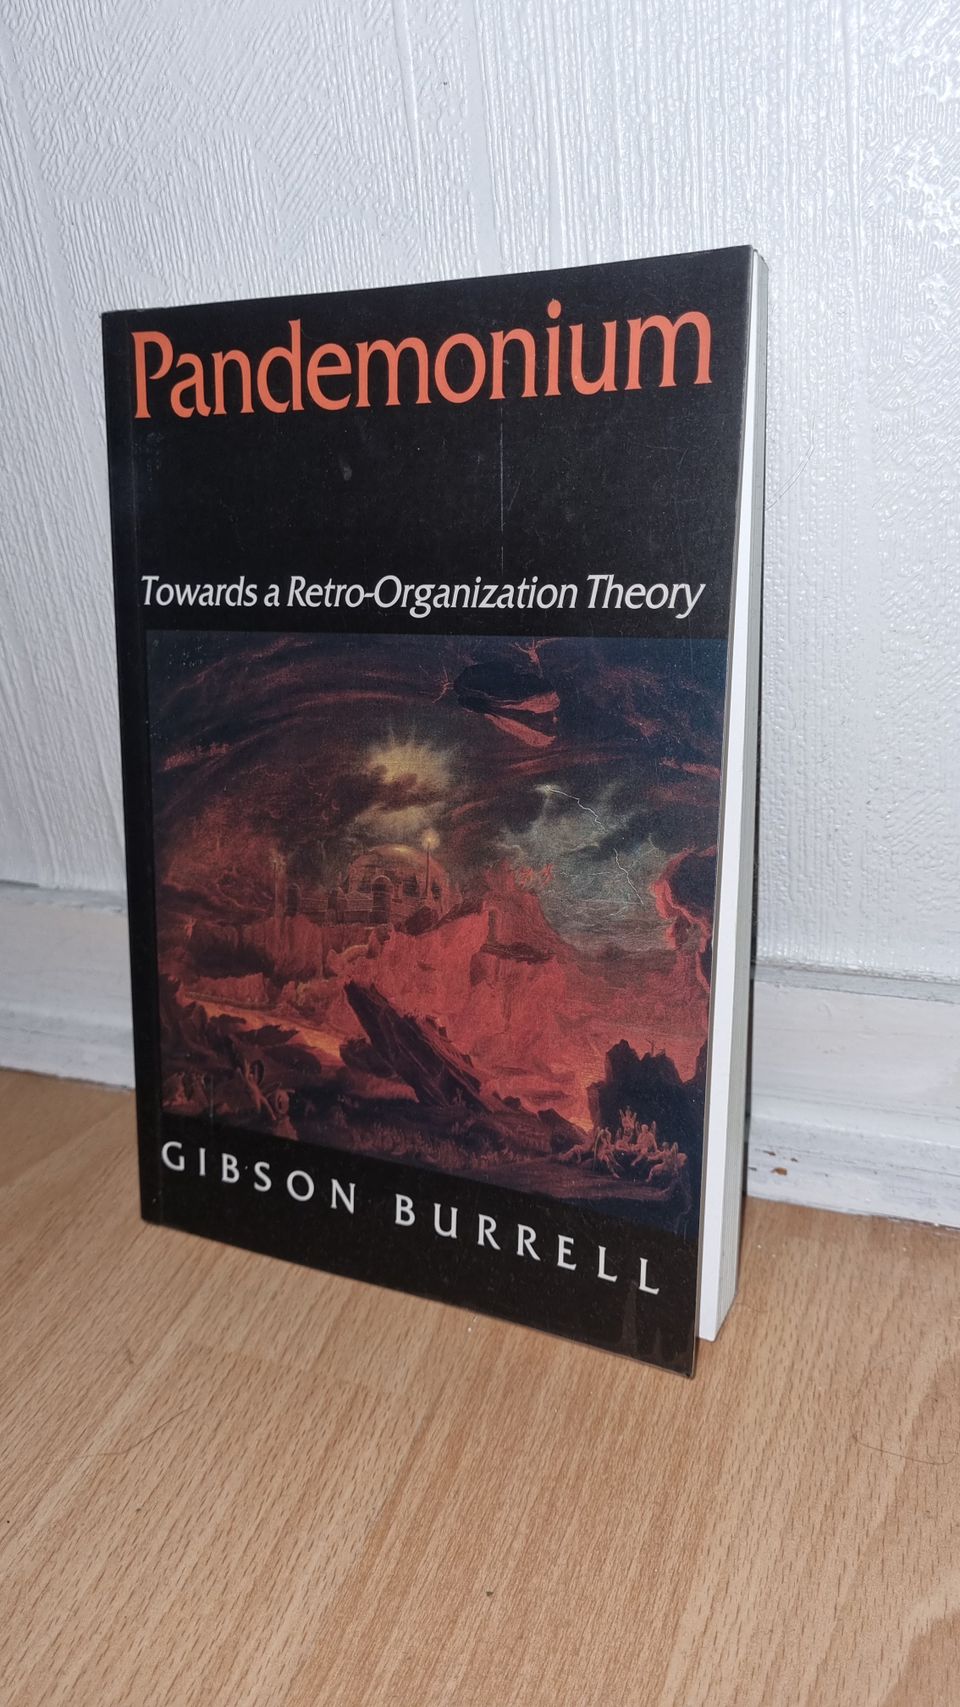 Gibson Burrell: Pandemonium - Towards a Retro-Organization Theory